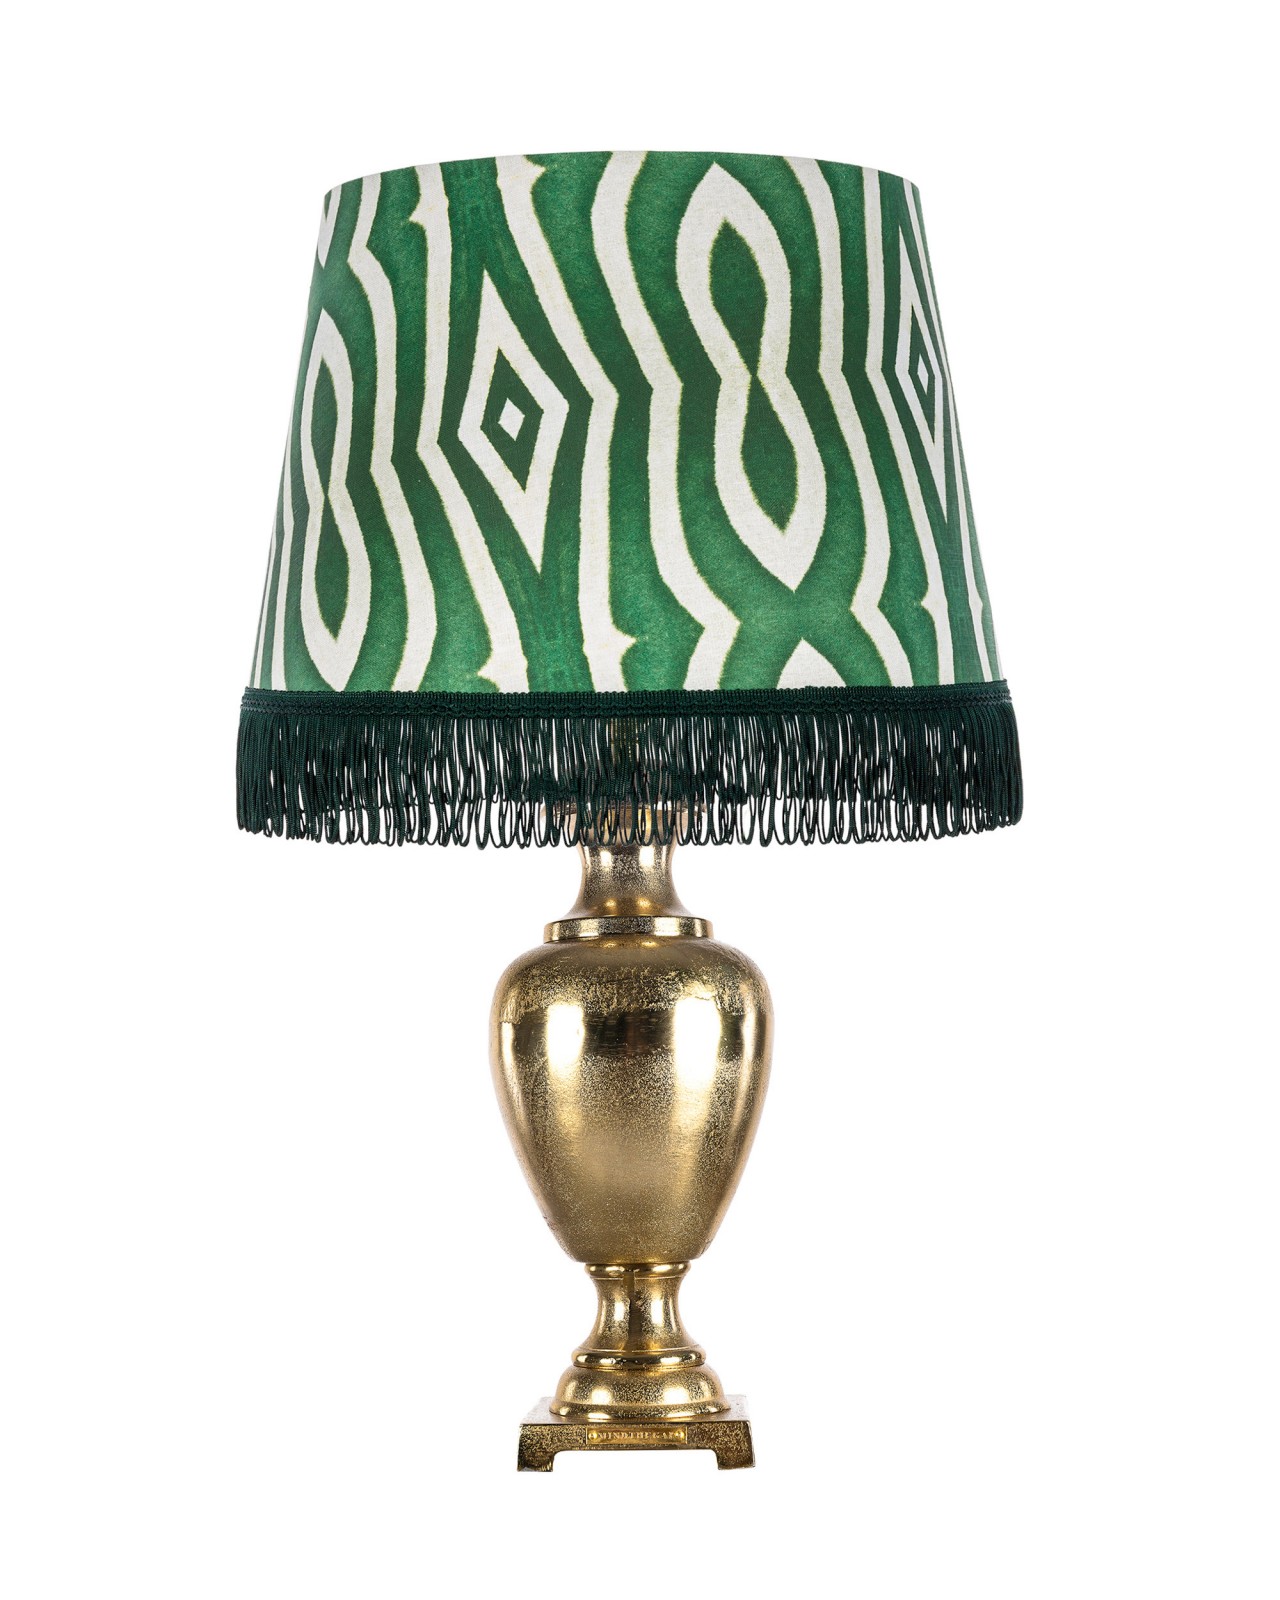 RIVERSIDE ULPIA Table Lamp